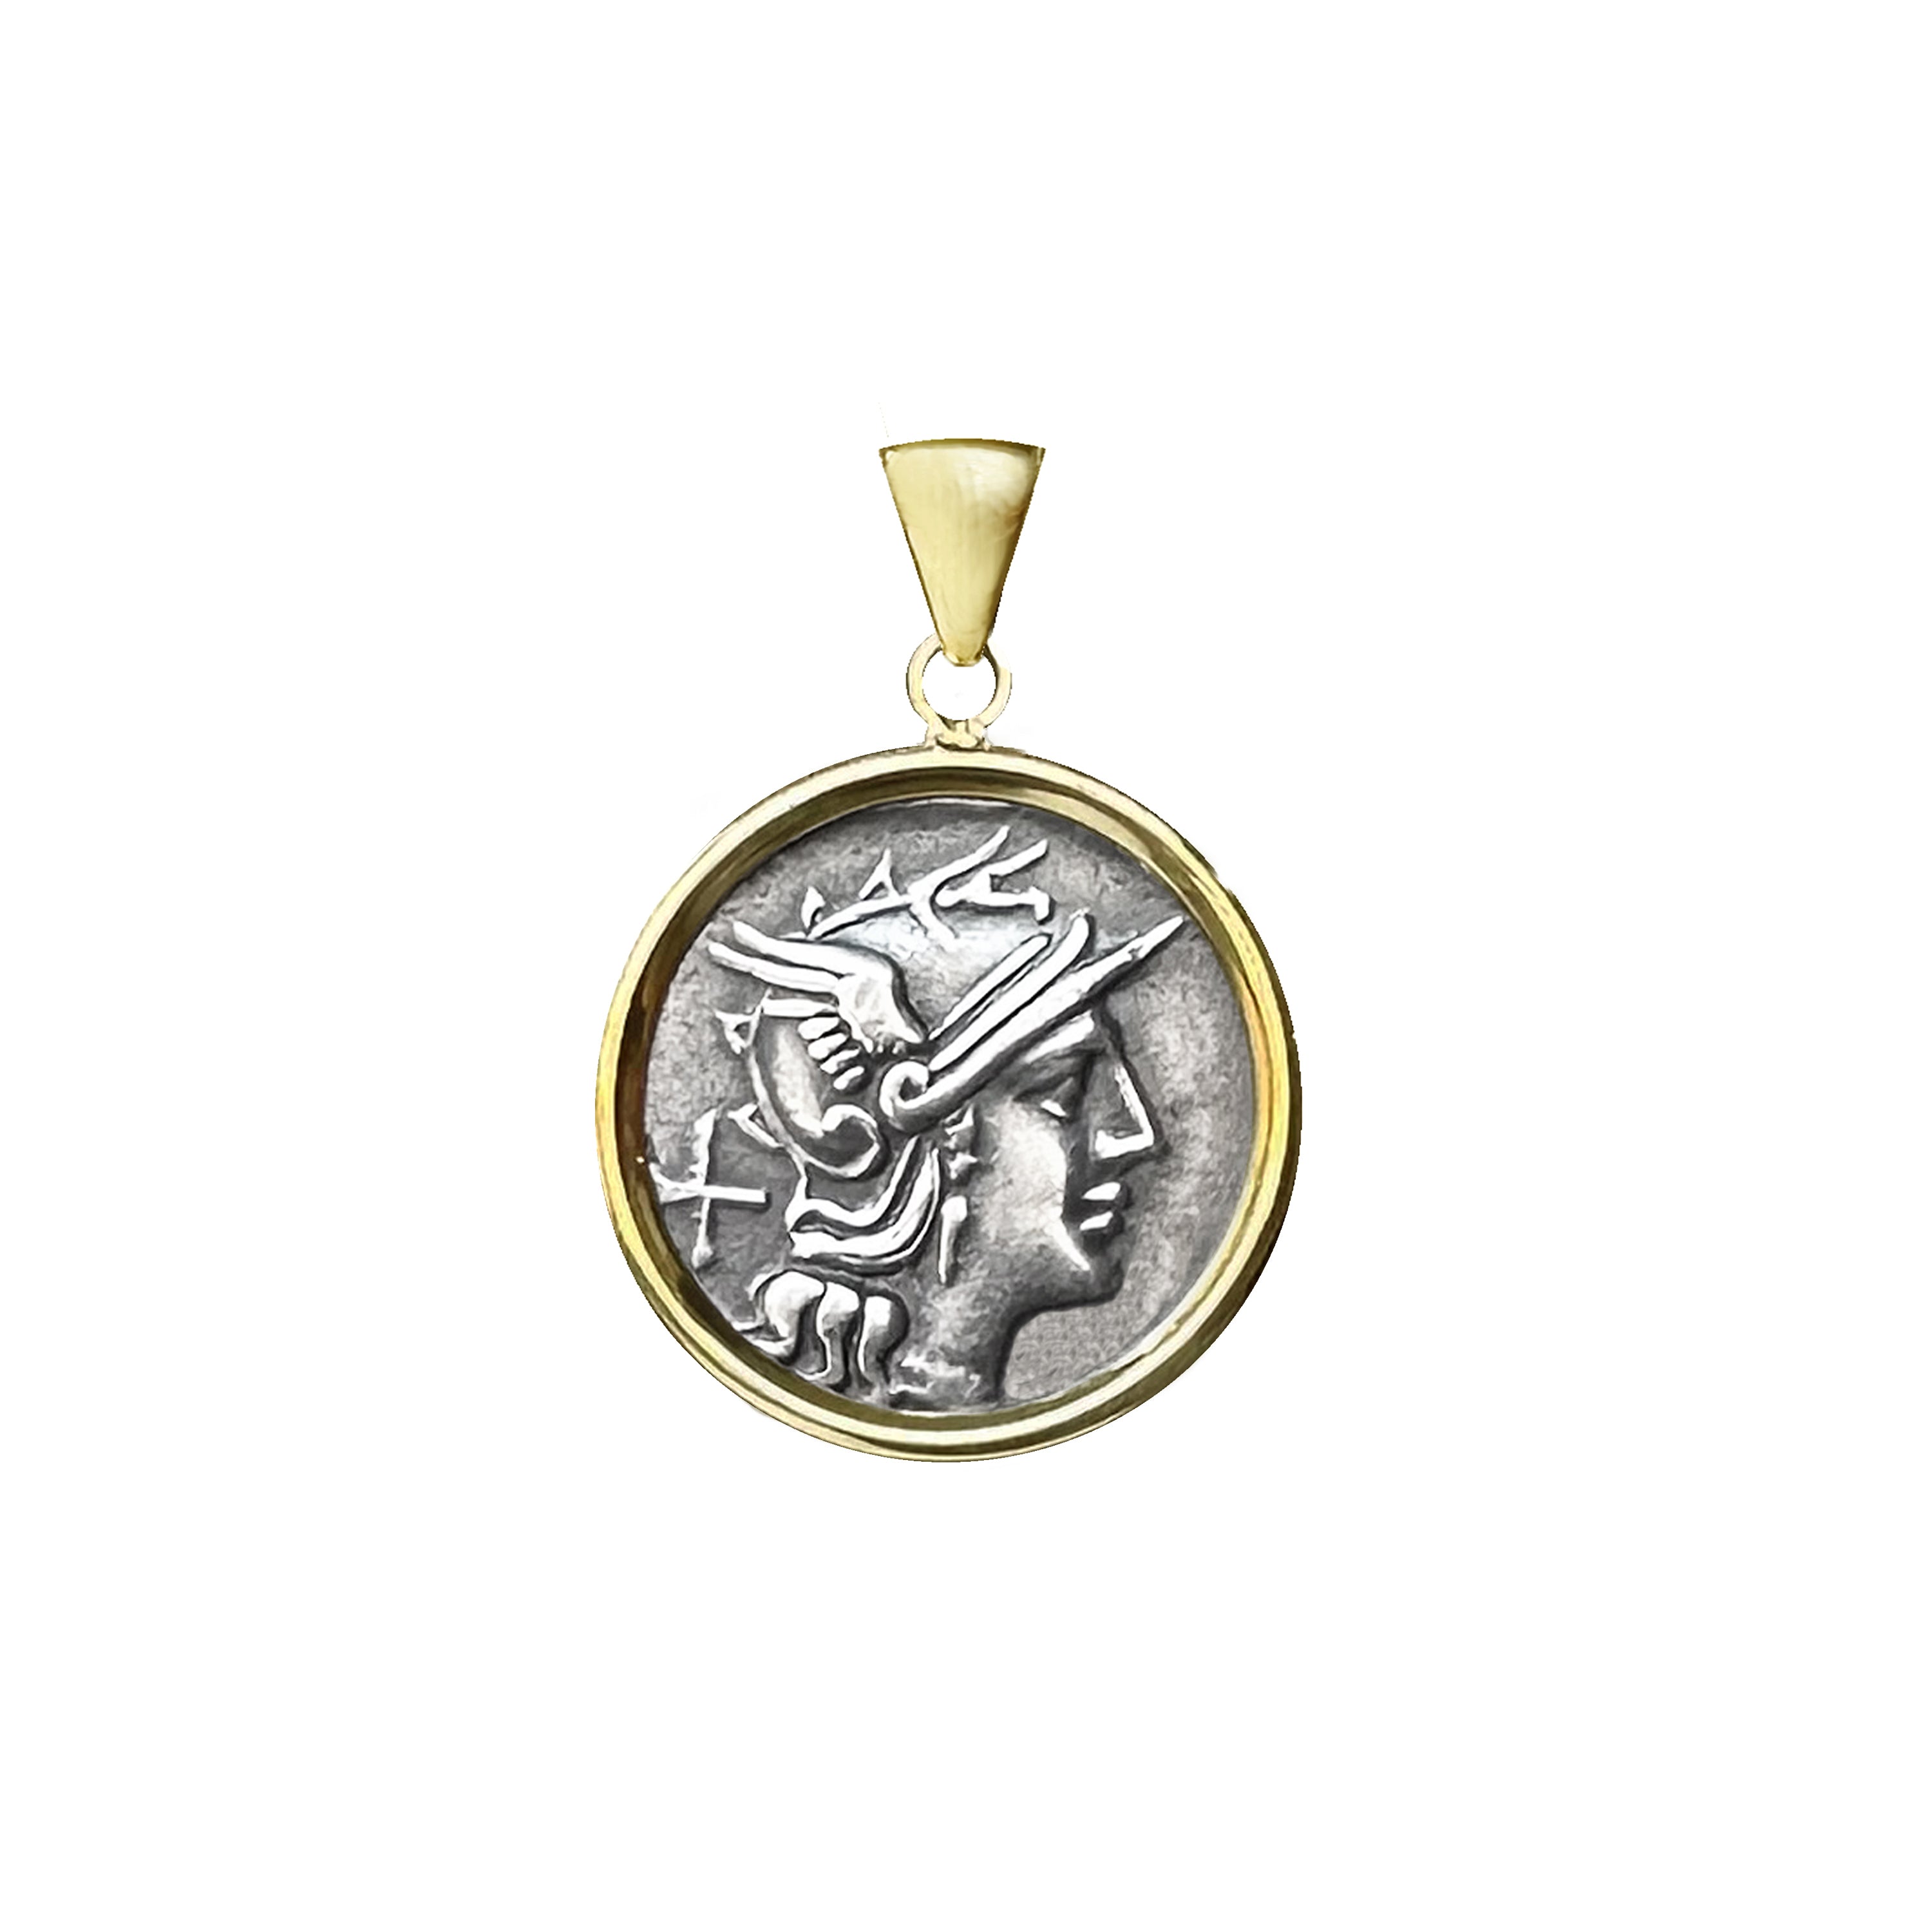 Genuine Roman Silver Coin 150 BC 18Kt Gold Pendant Depicting Goddess Rome